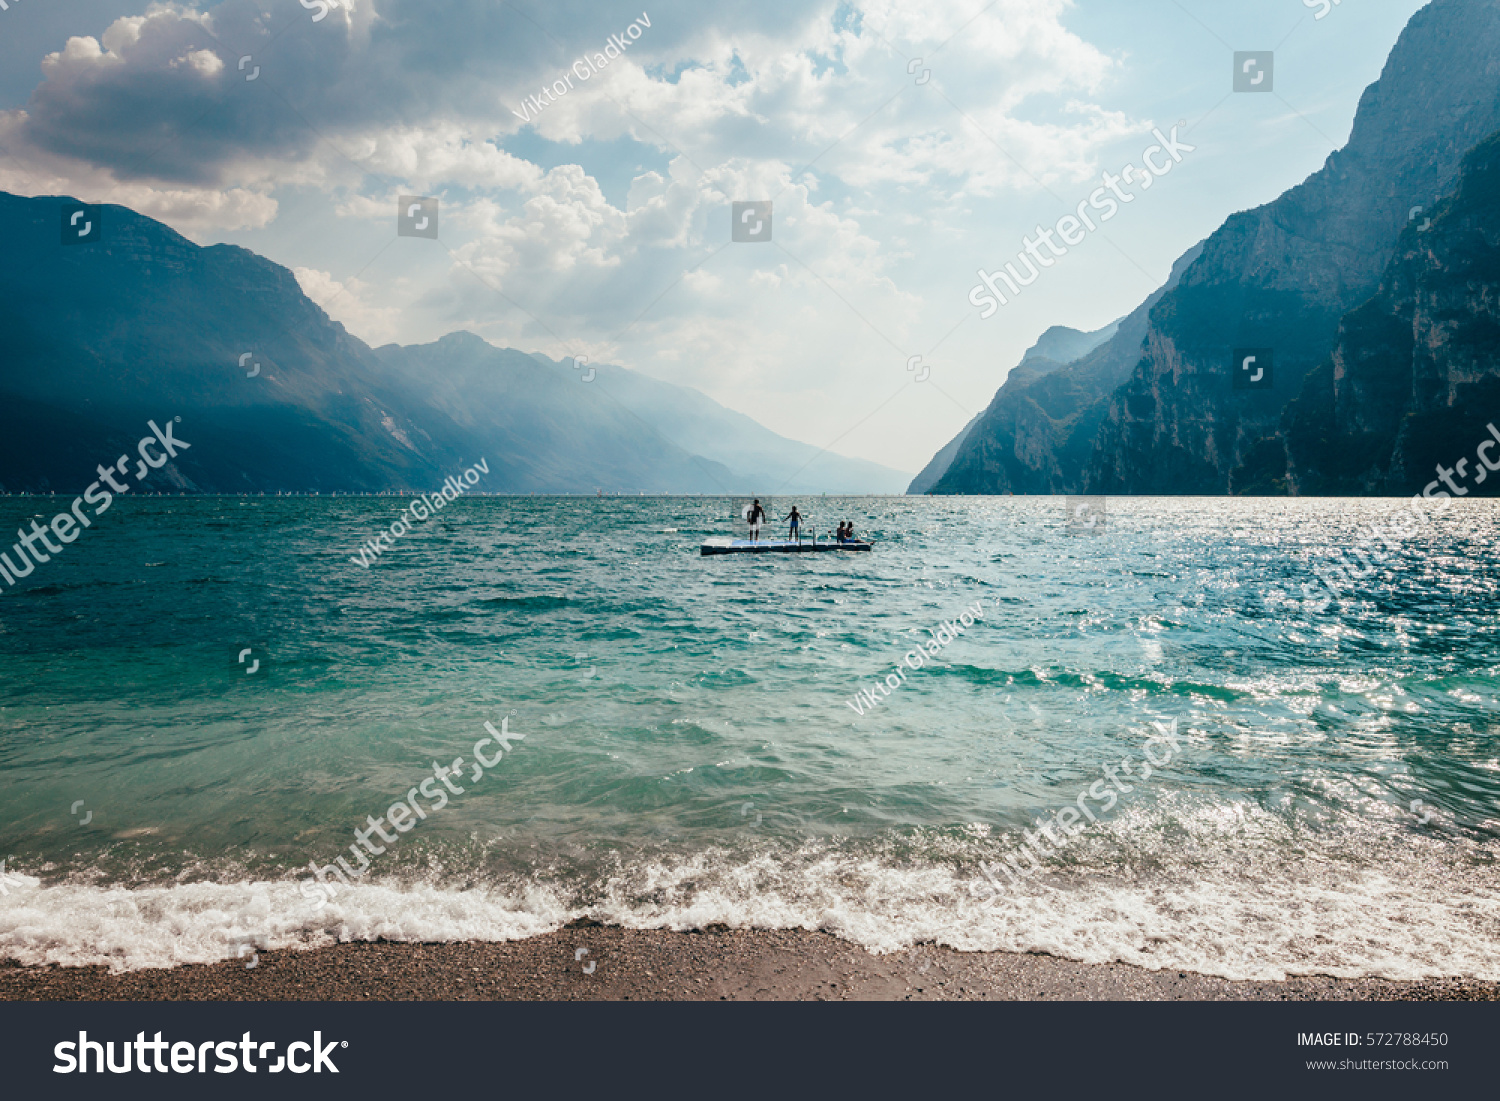 Scenic landscape of beautiful Garda lake and mountains, Italy. Nature background #572788450